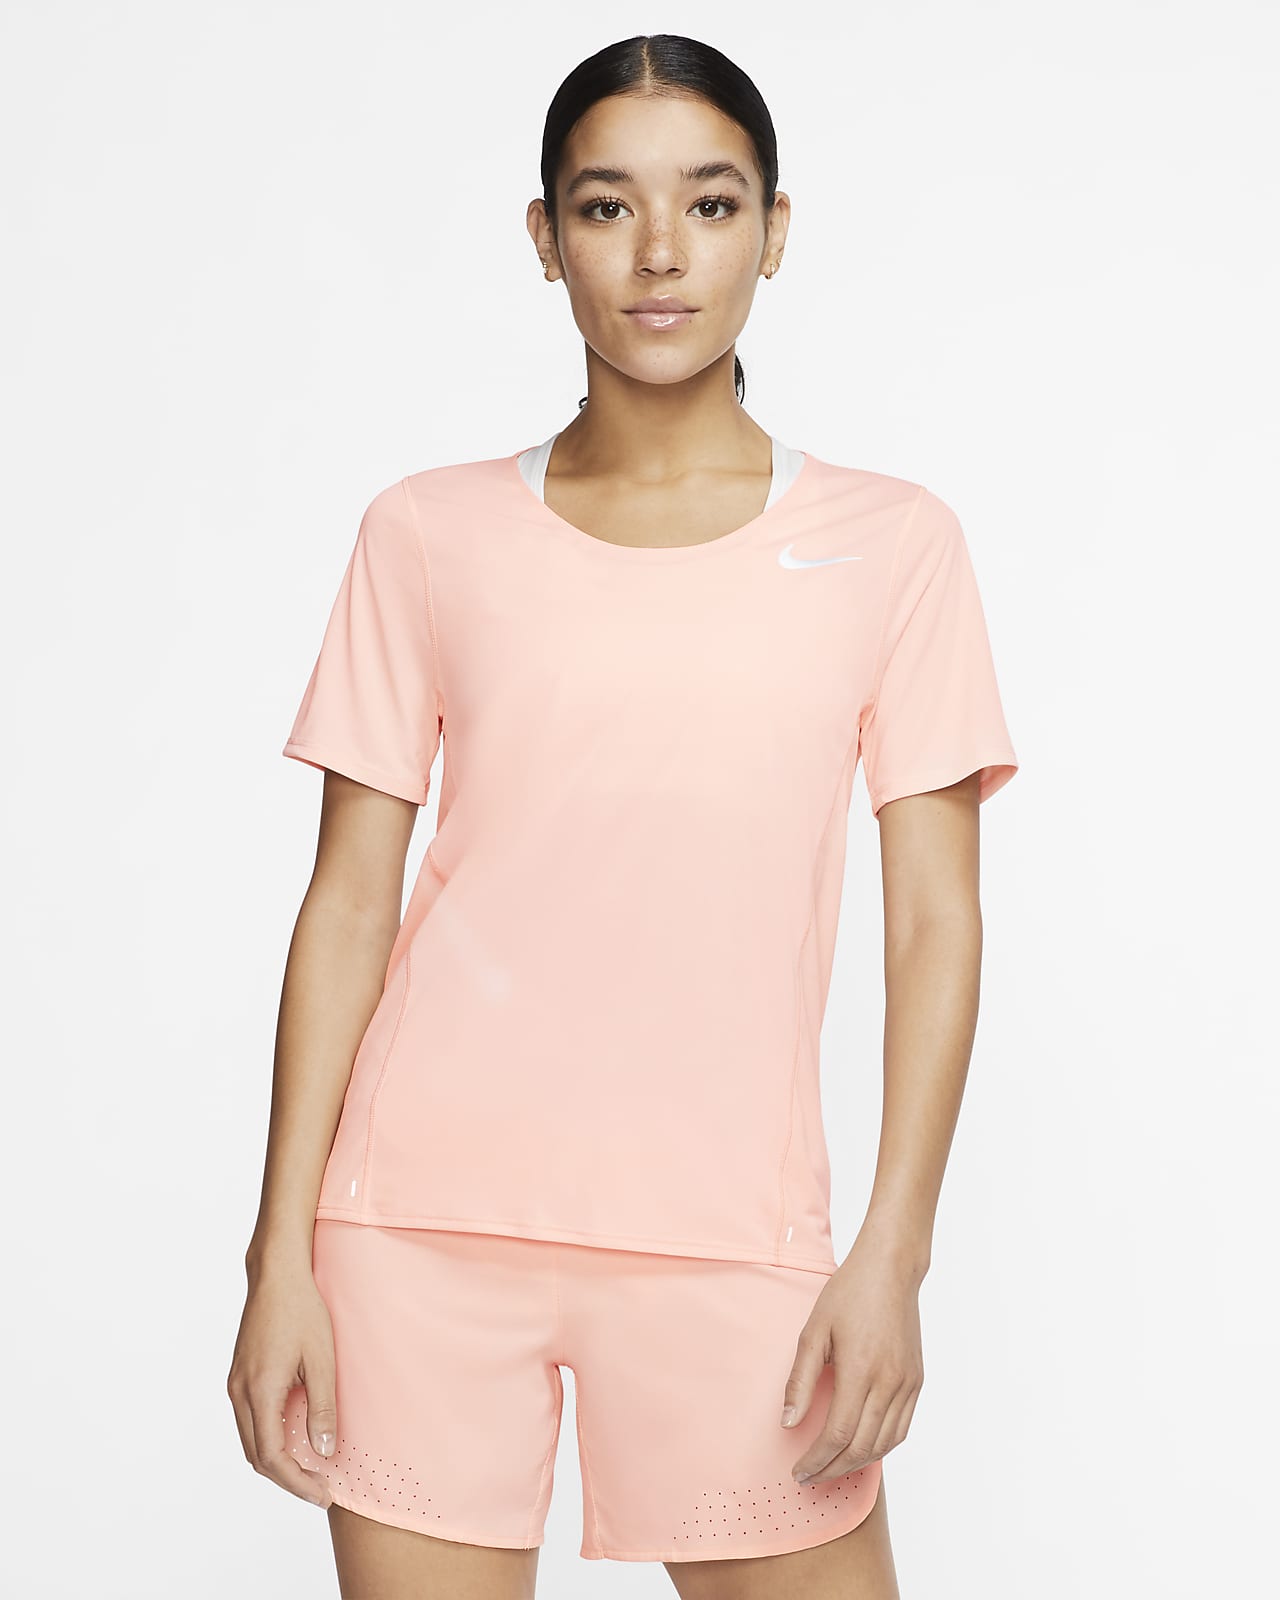 Nike City Sleek Women's Short-Sleeve 